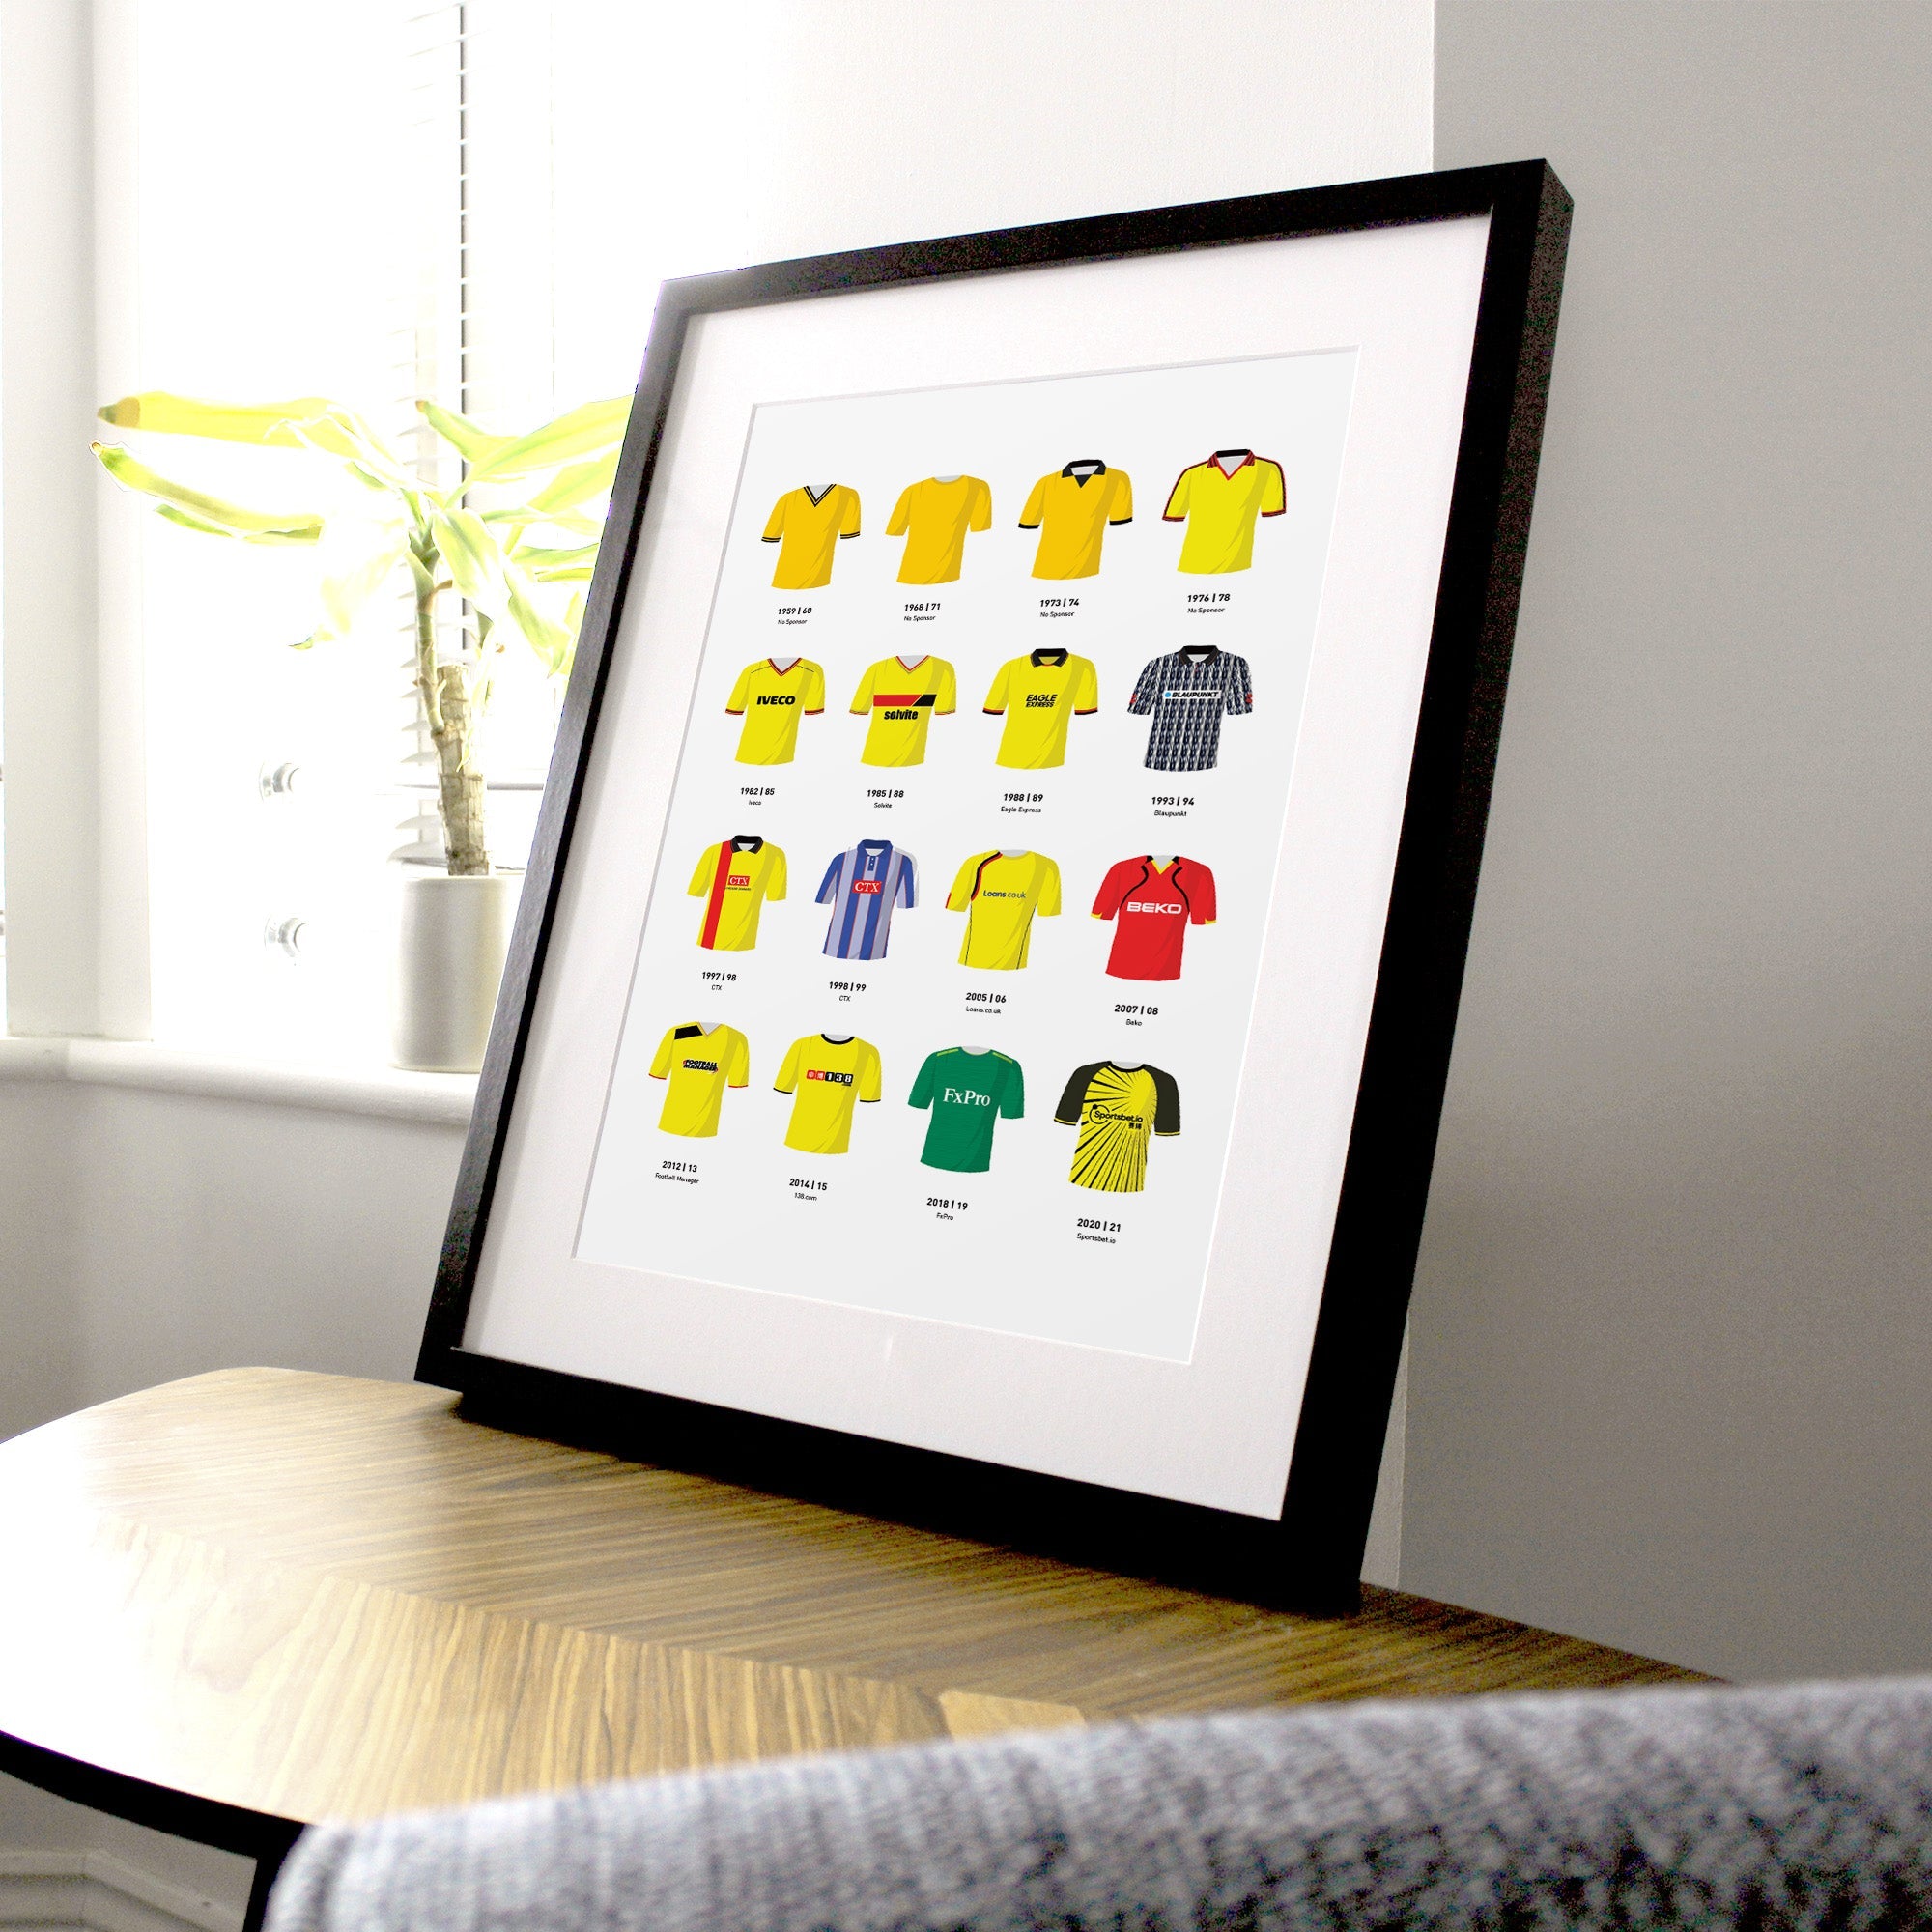 Watford Classic Kits Football Team Print Good Team On Paper